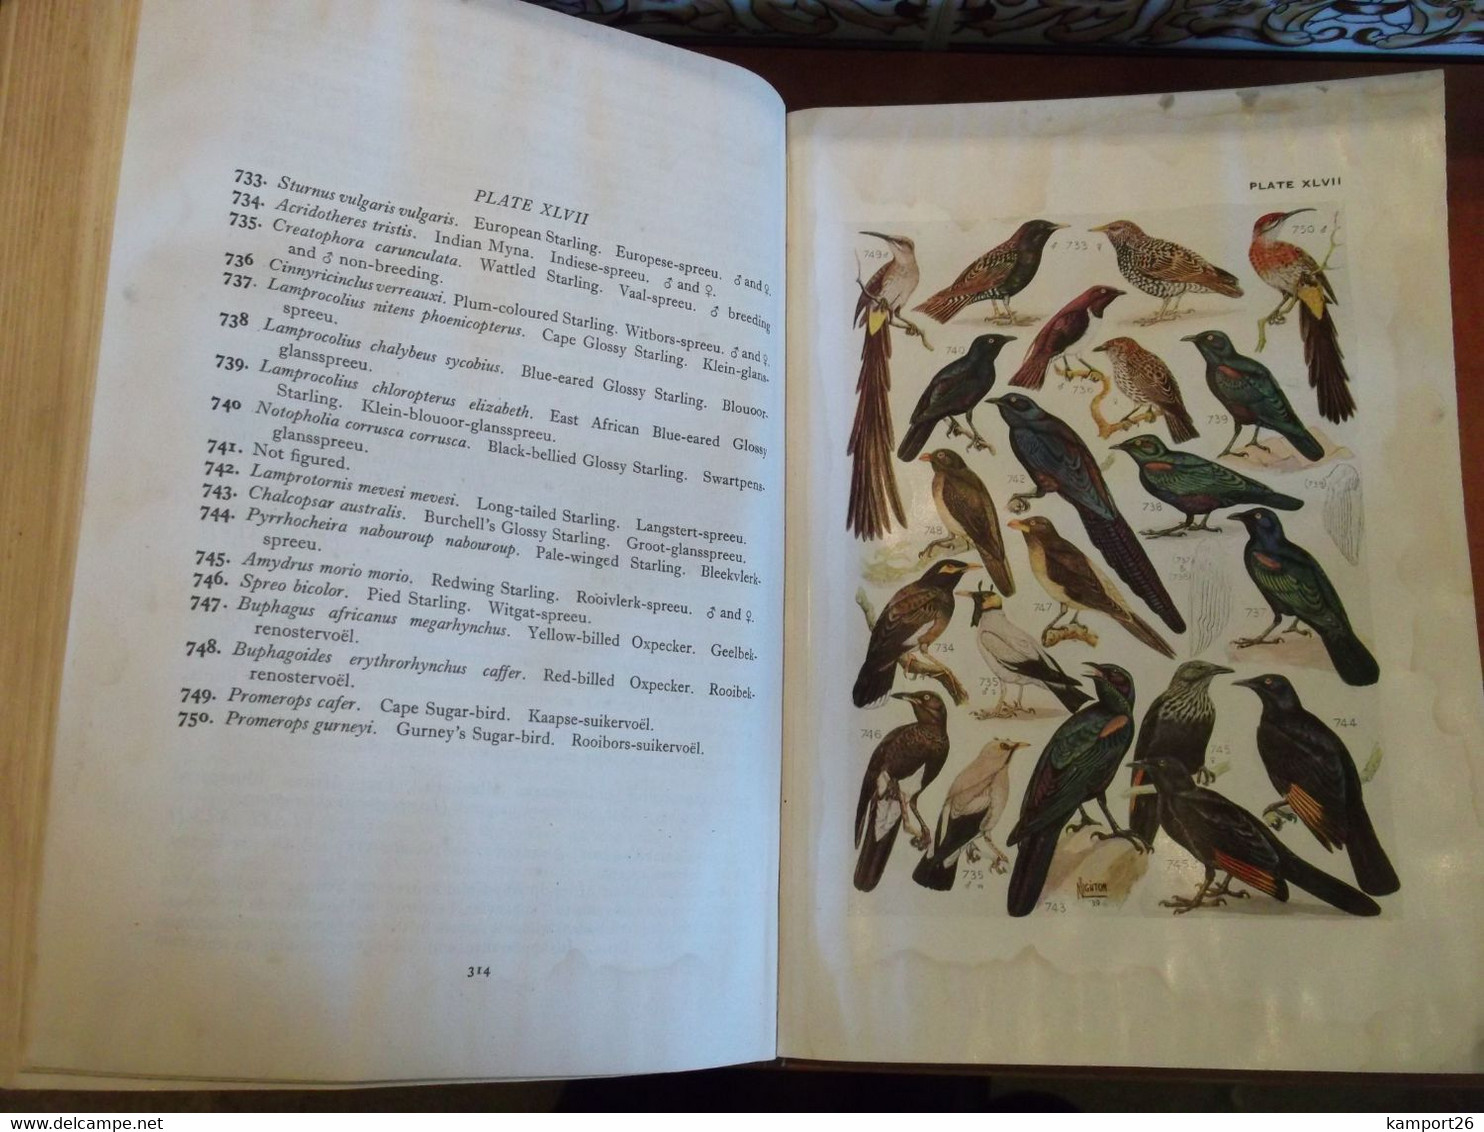 1953 The Birds of South Africa AUSTIN ROBERTS Ornithology Le monde de l'ornithologie